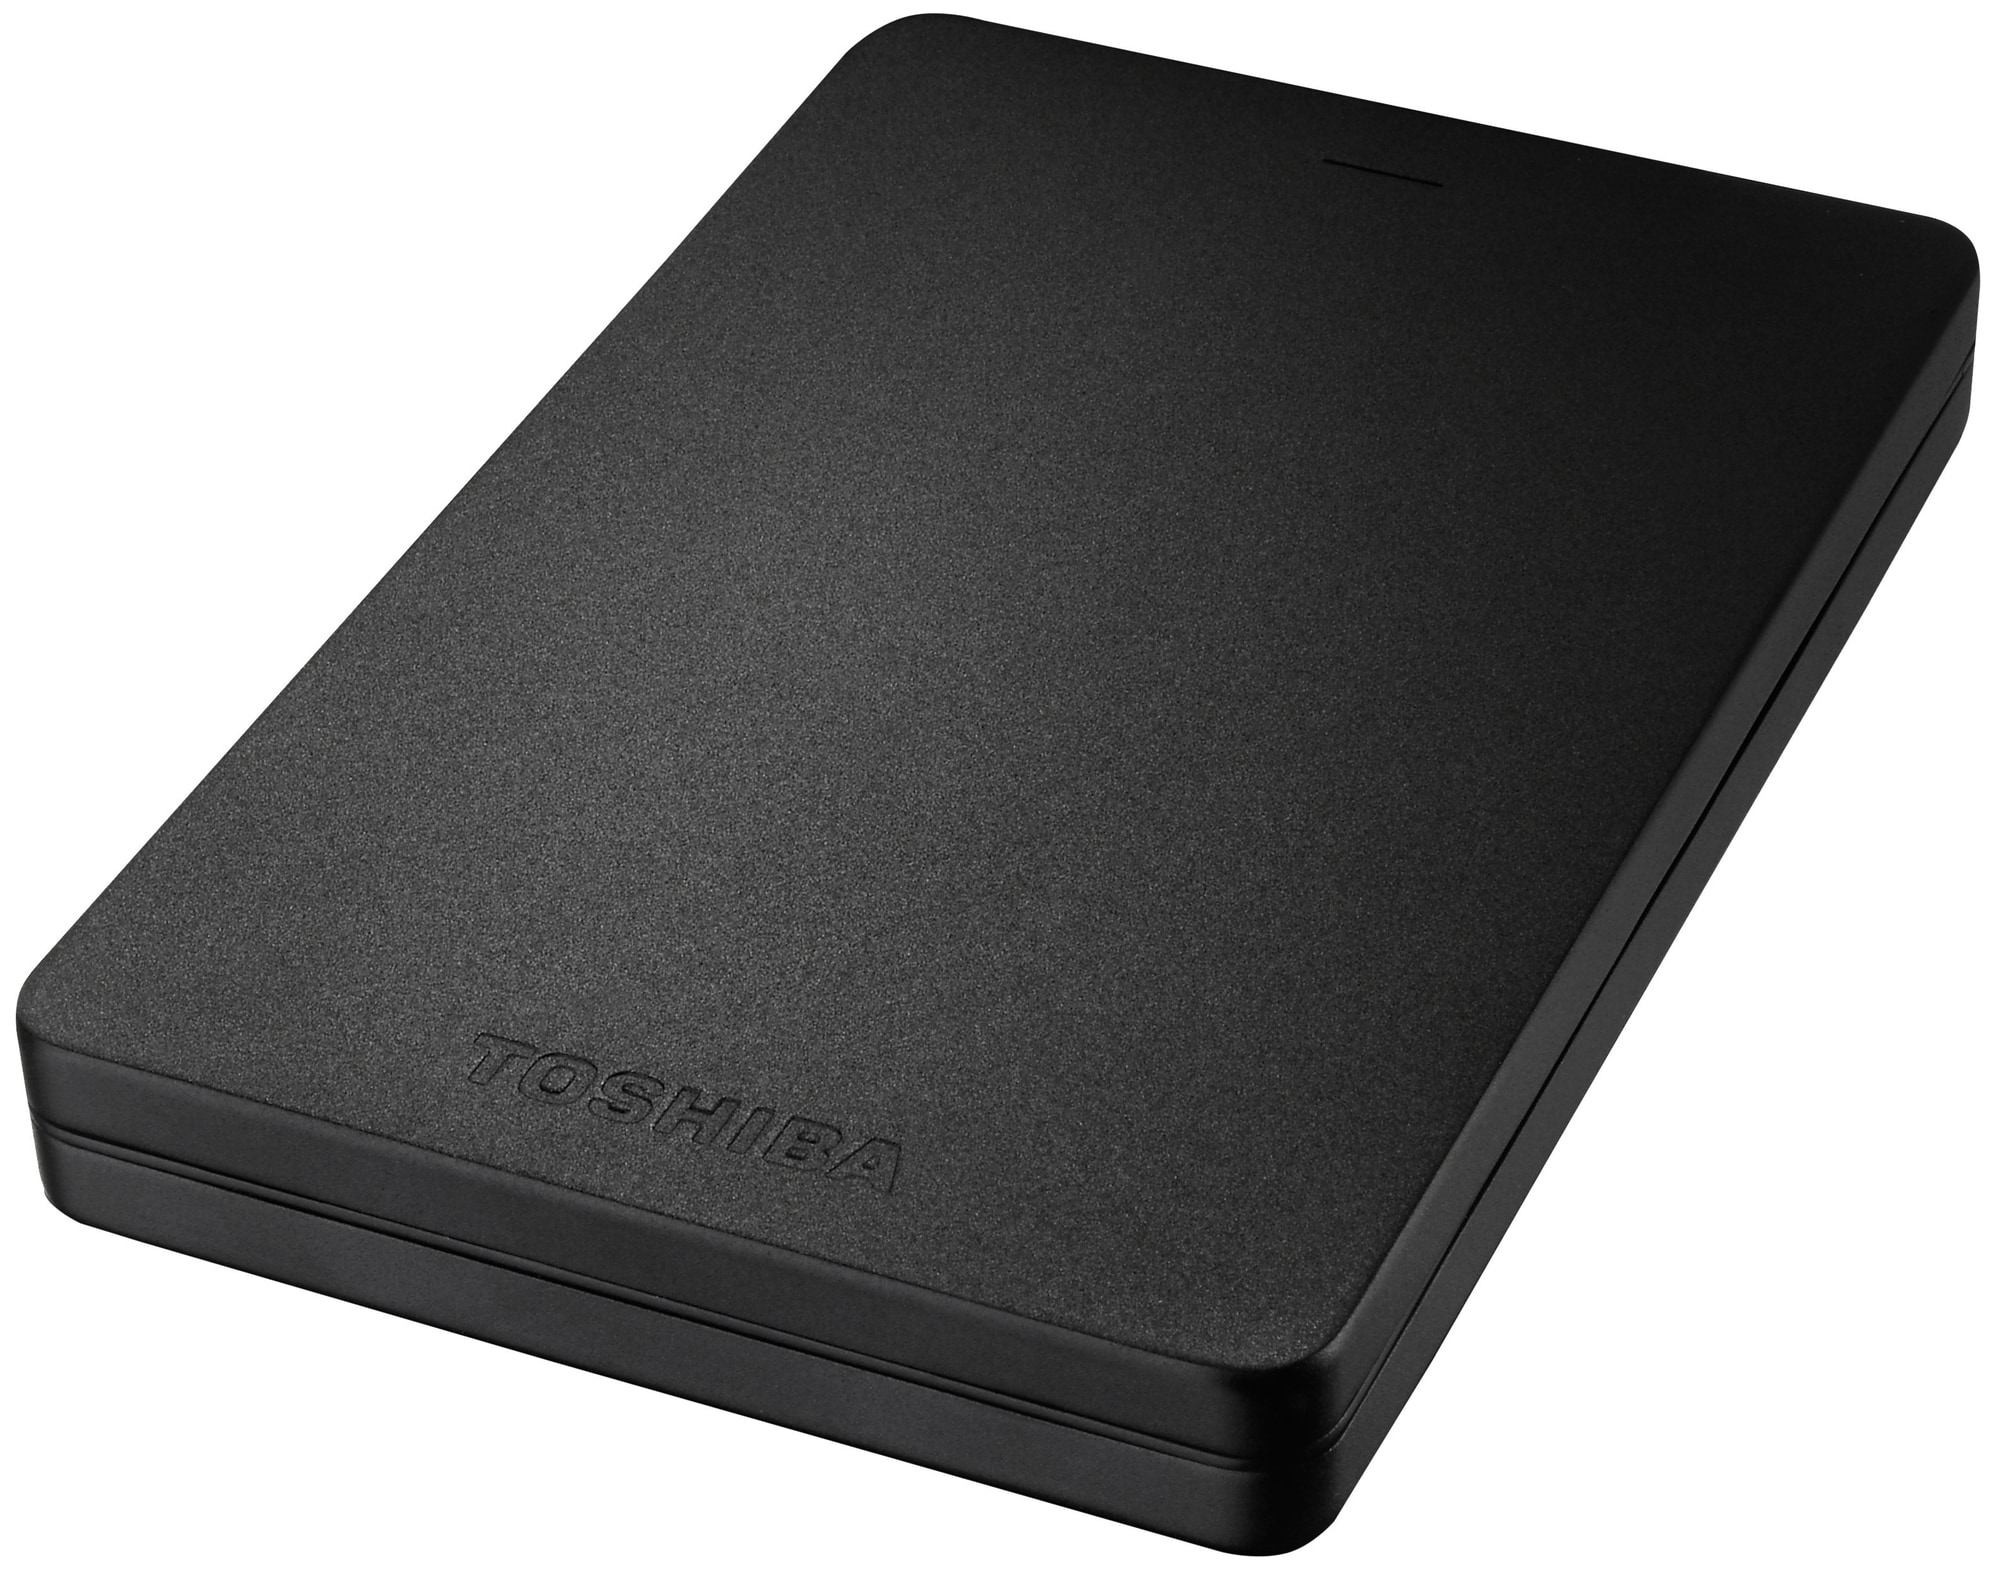 Toshiba Canvio Alu 1 TB ekstern harddisk - sort | Elgiganten